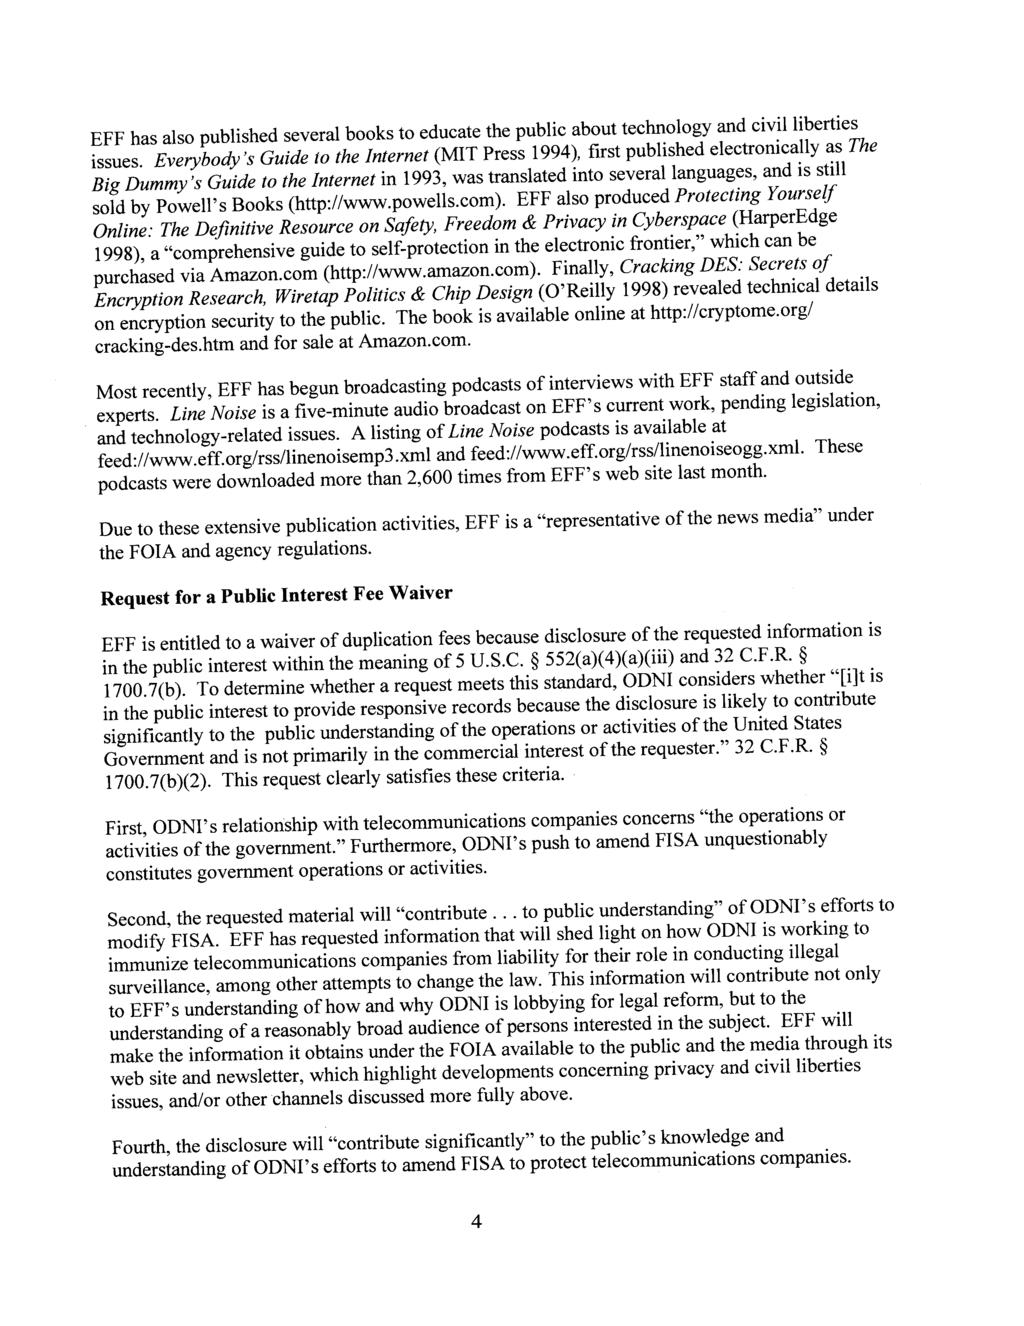 Case 3:07-cv-05278-SI Document